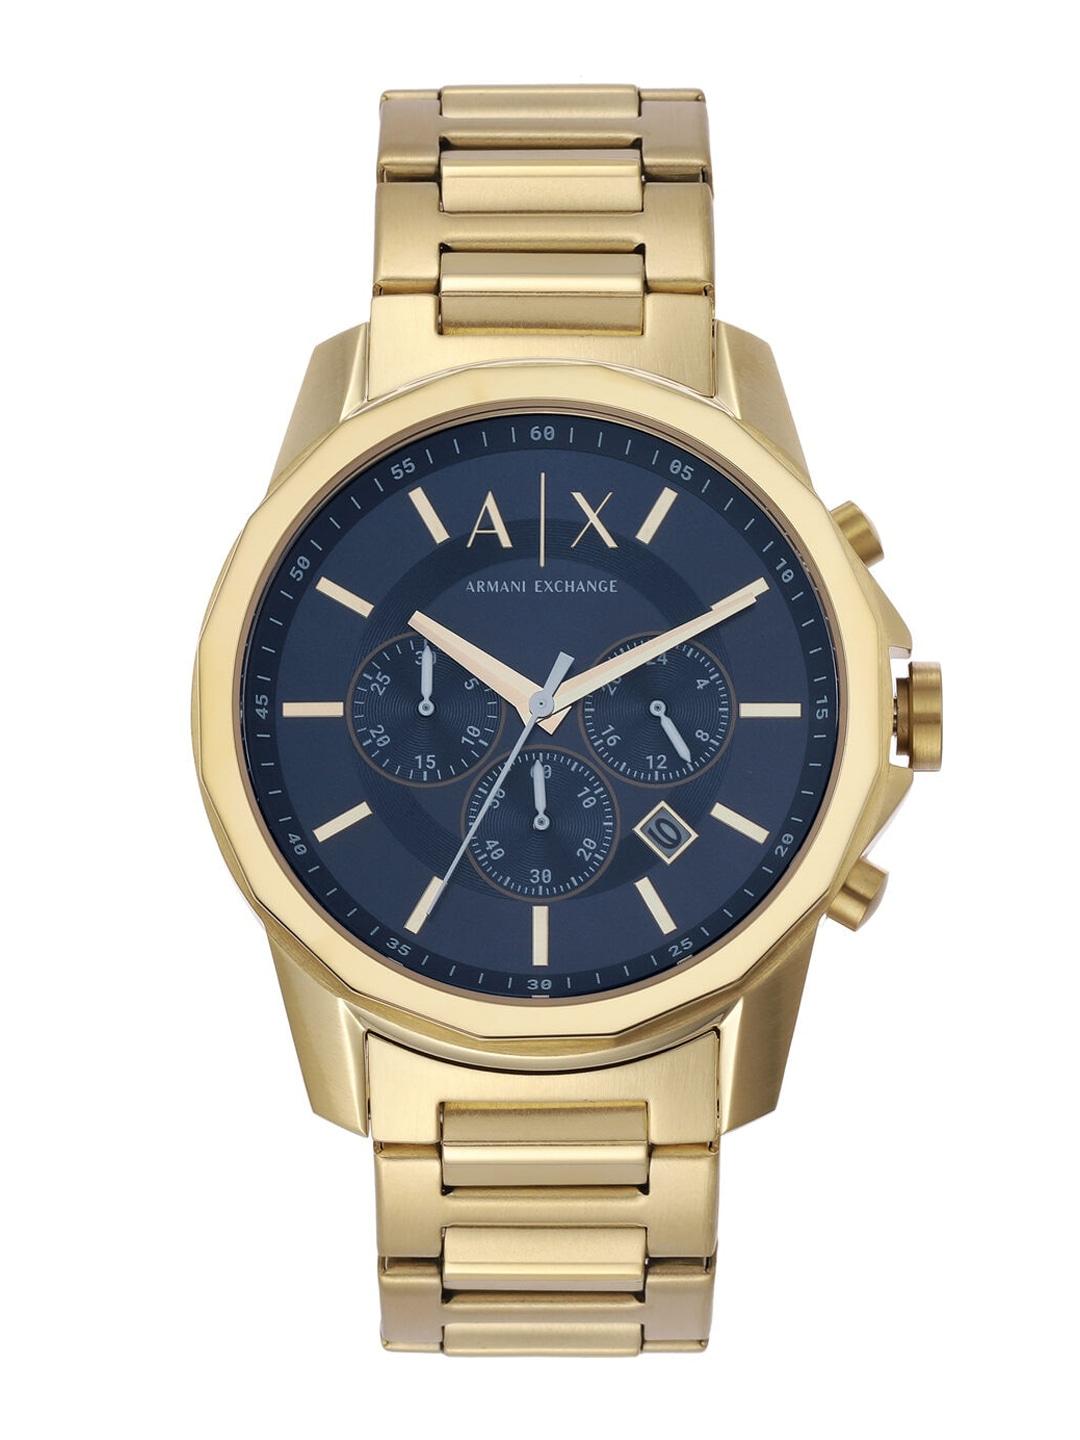 armani-exchange-men-stainless-steel-bracelet-style-analogue-multi-function-watch-ax7151set